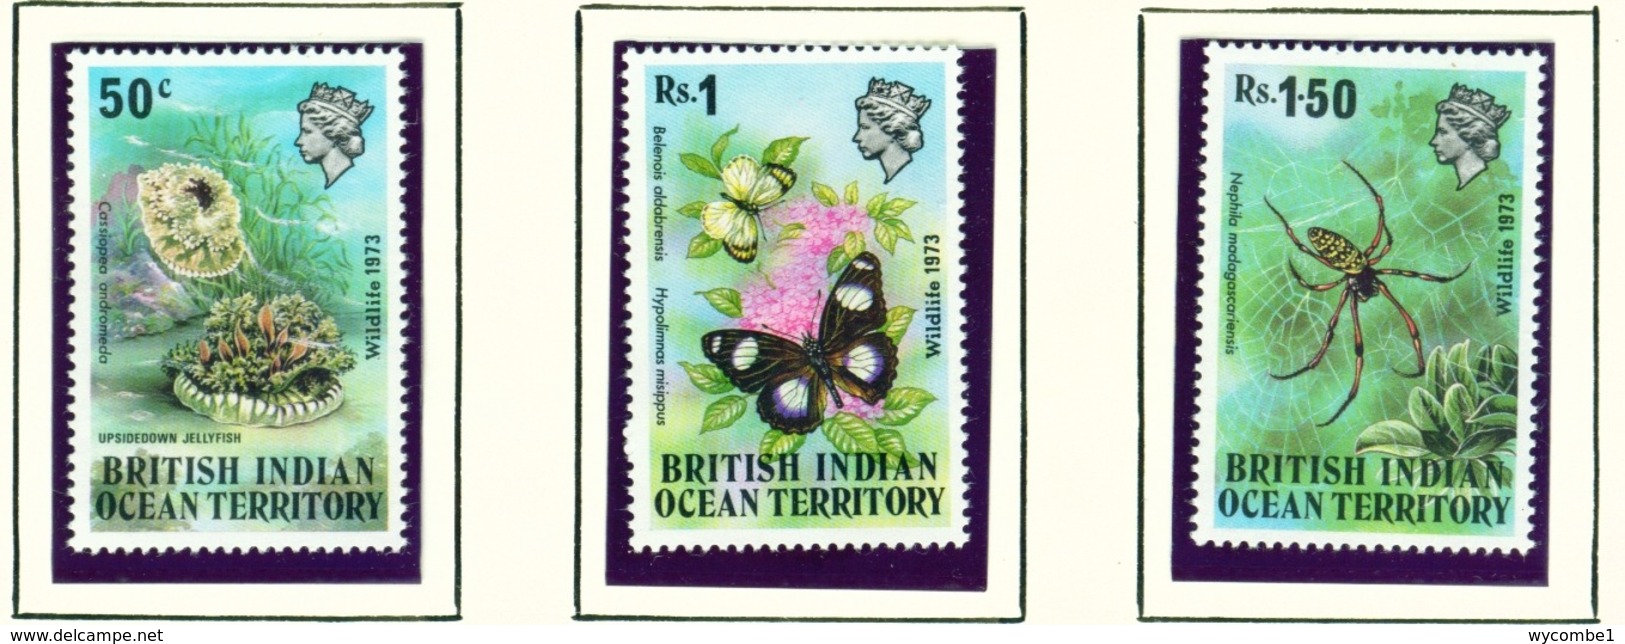 BRITISH INDIAN OCEAN TERRITORY  -  1973 Wildlife Set Unmounted/Never Hinged Mint - British Indian Ocean Territory (BIOT)